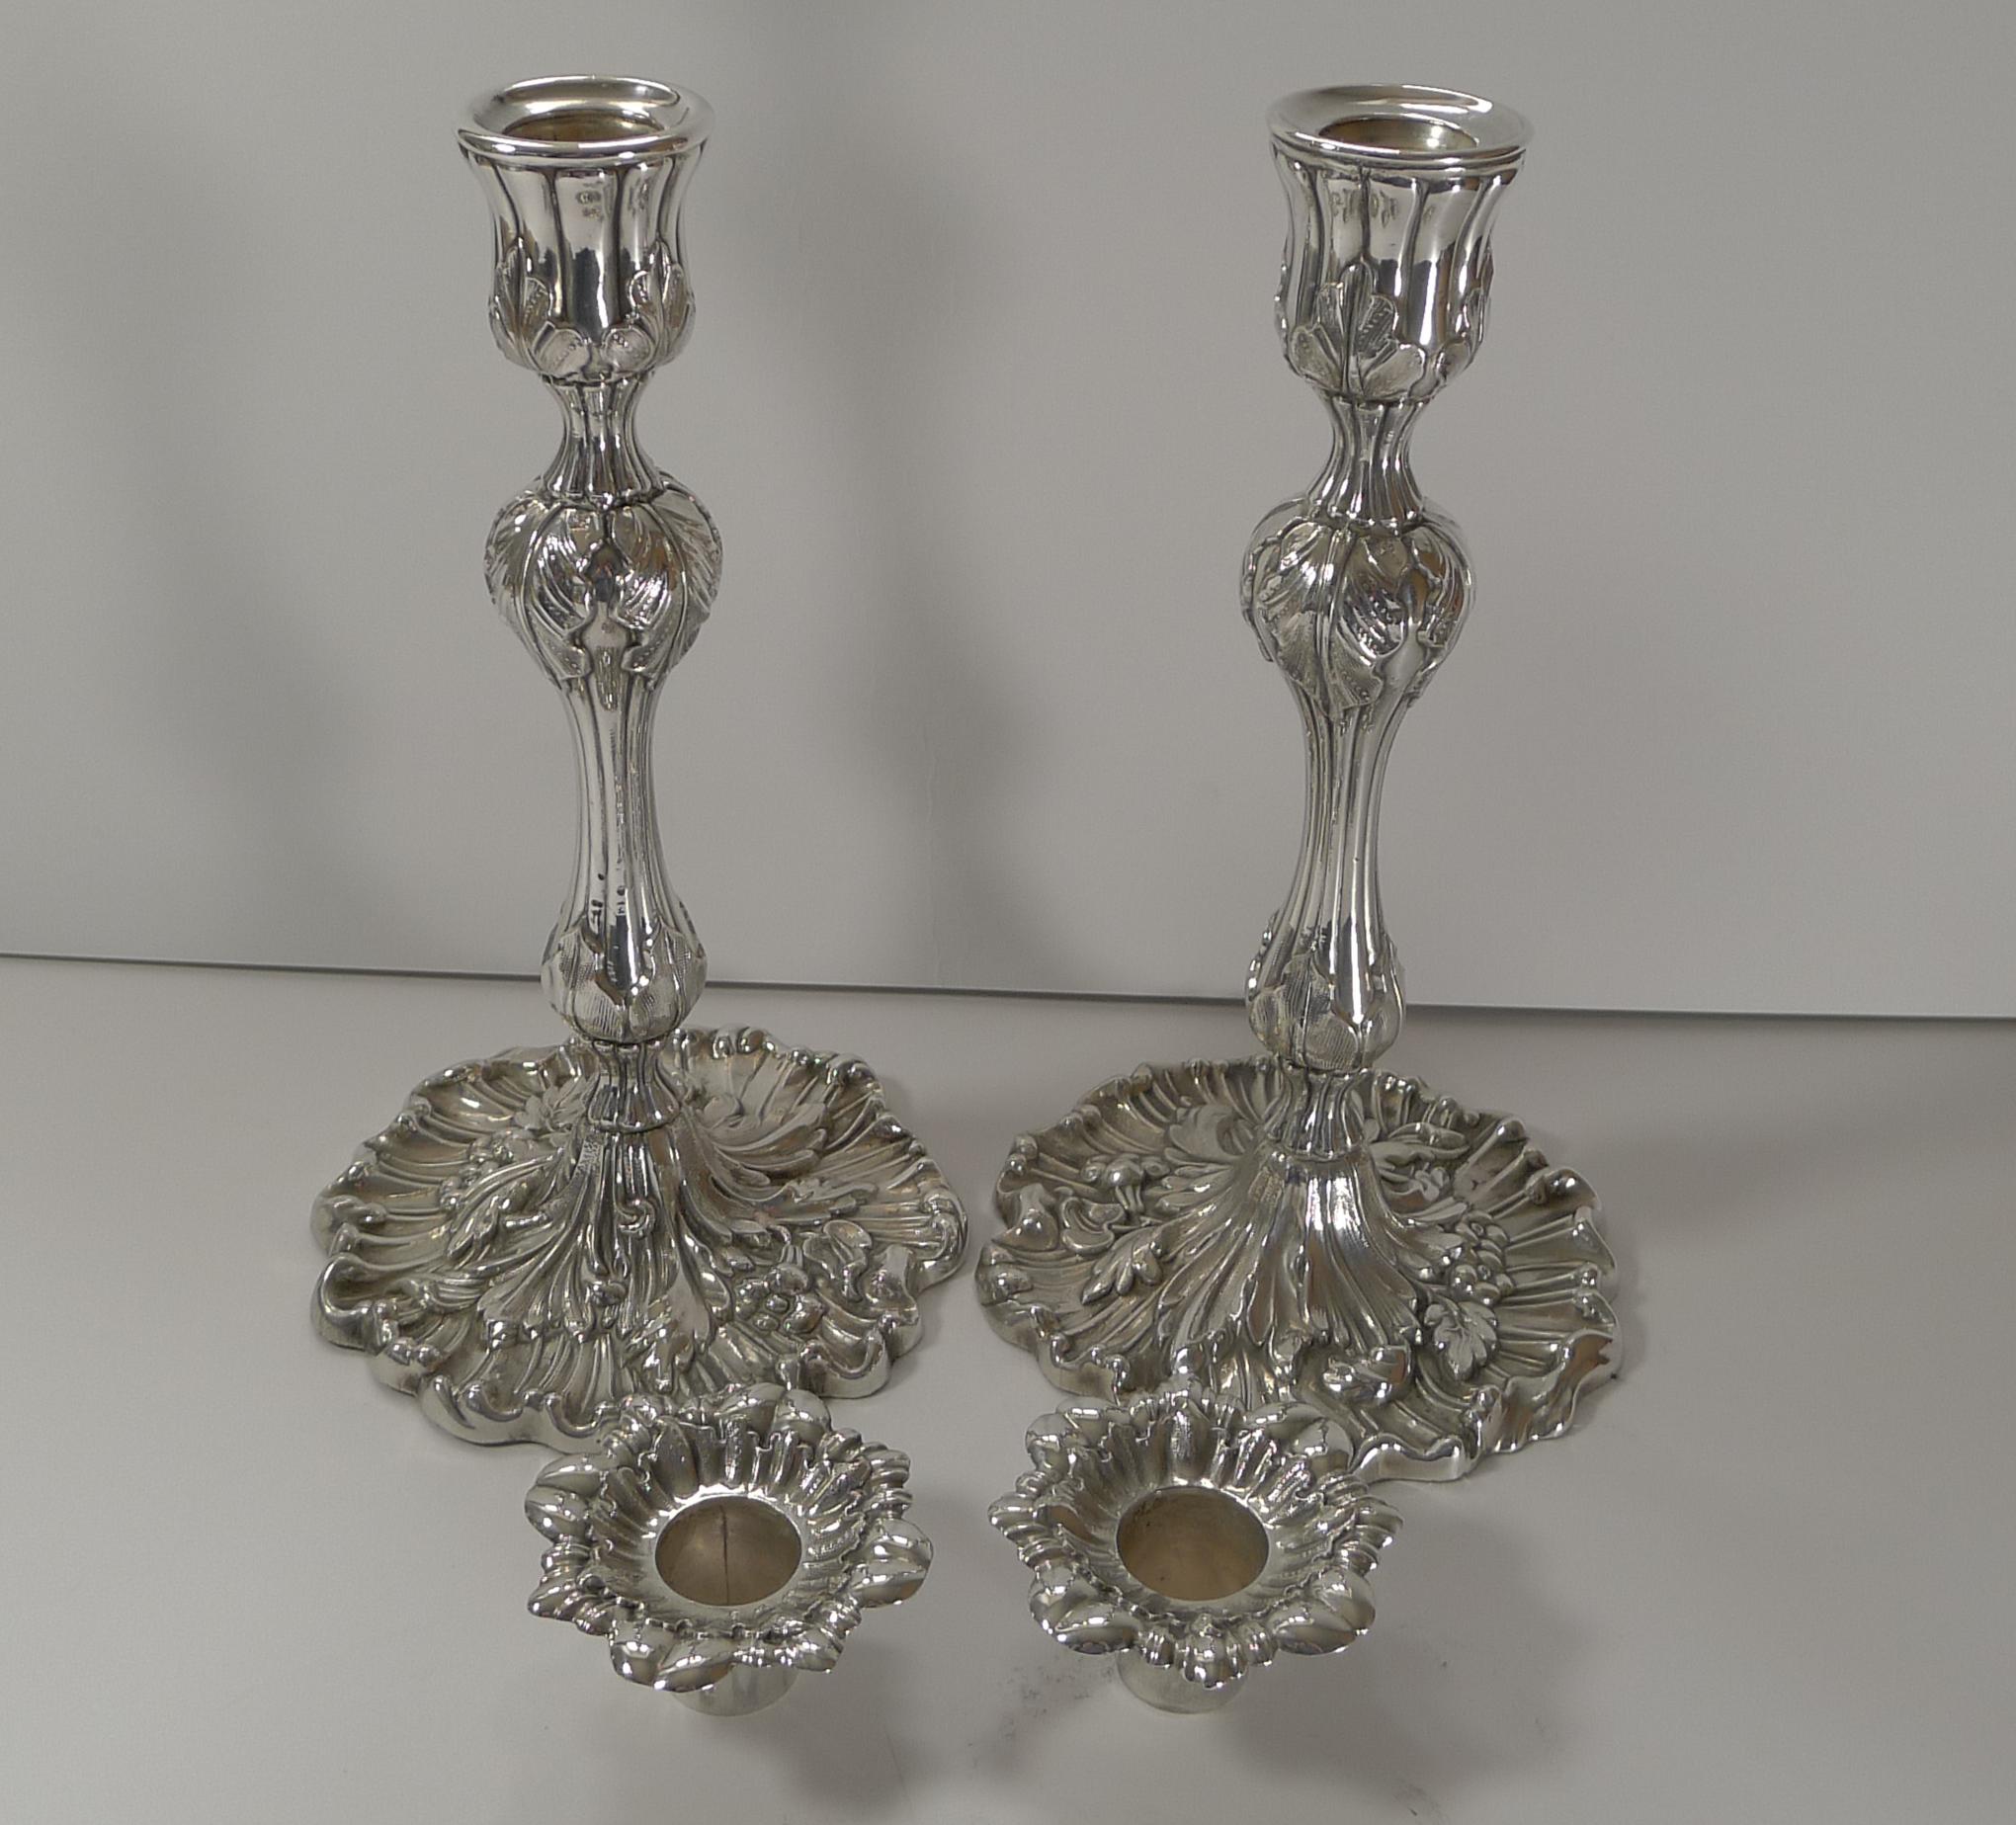 Anglais Paire de chandeliers anglais anciens Art nouveau de style Art nouveau vers 1900, Art nouveau en vente